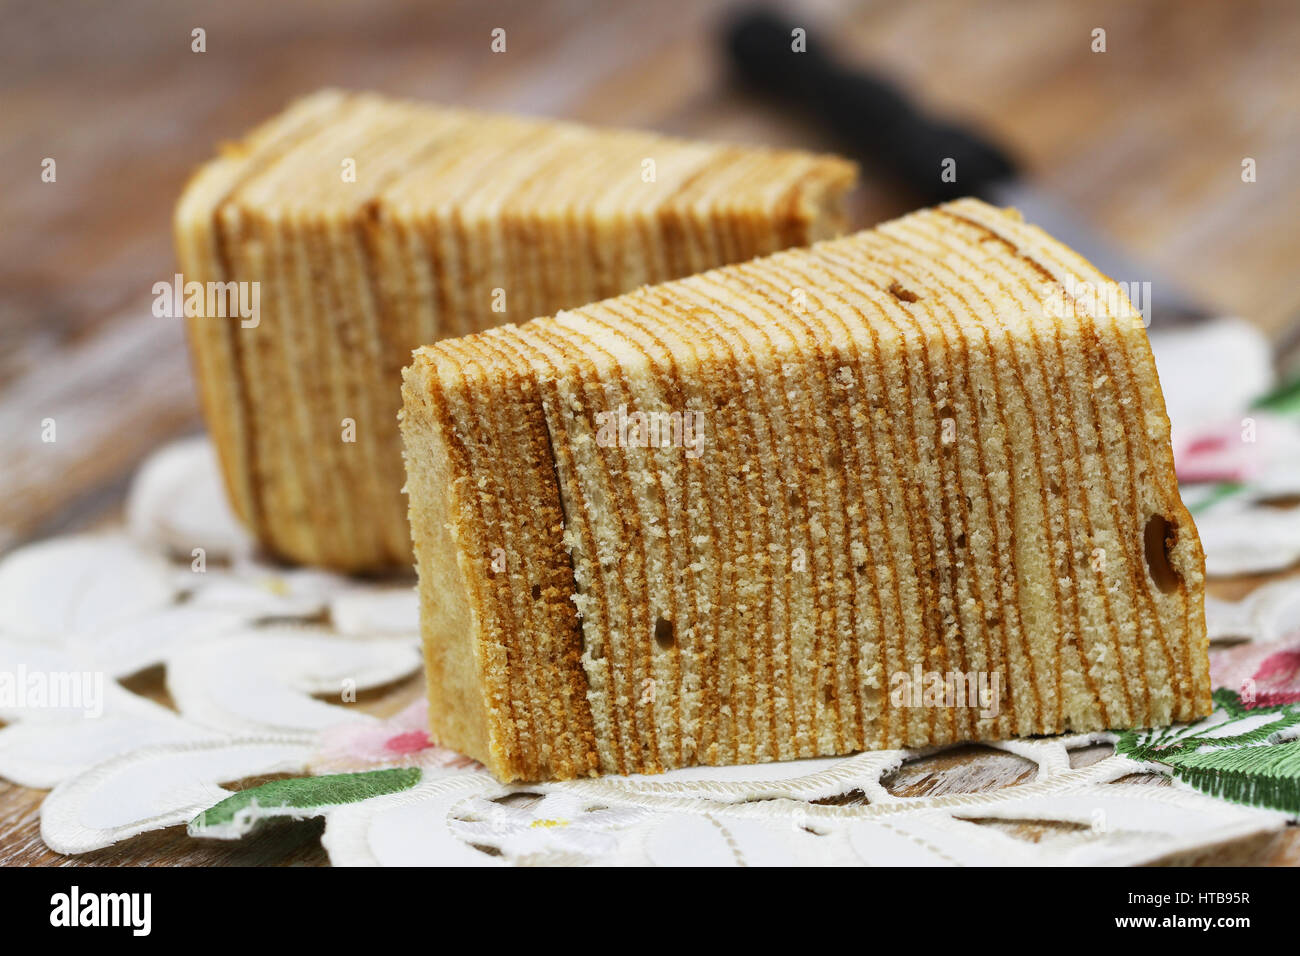 Slices of traditional sponge layered cake Stock Photo